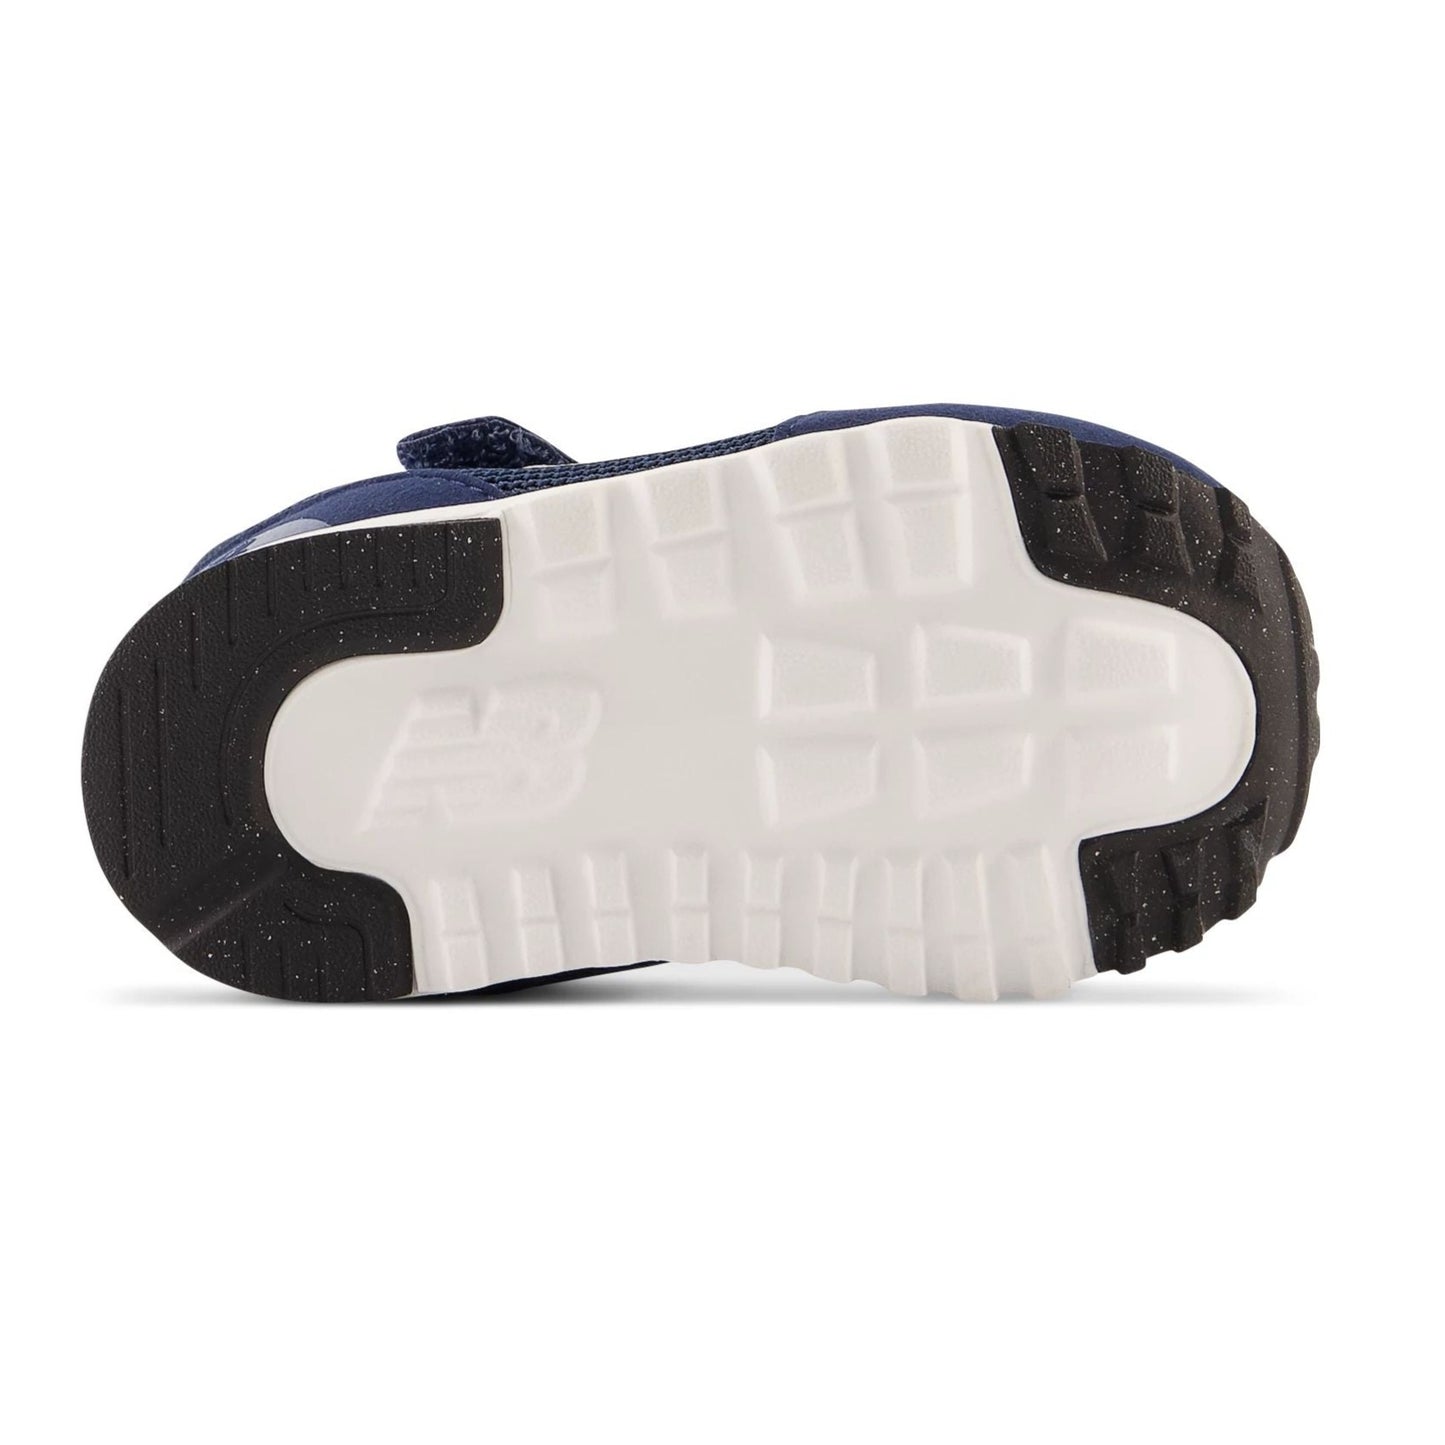 New Balance 515 Velcro Classic Sneaker